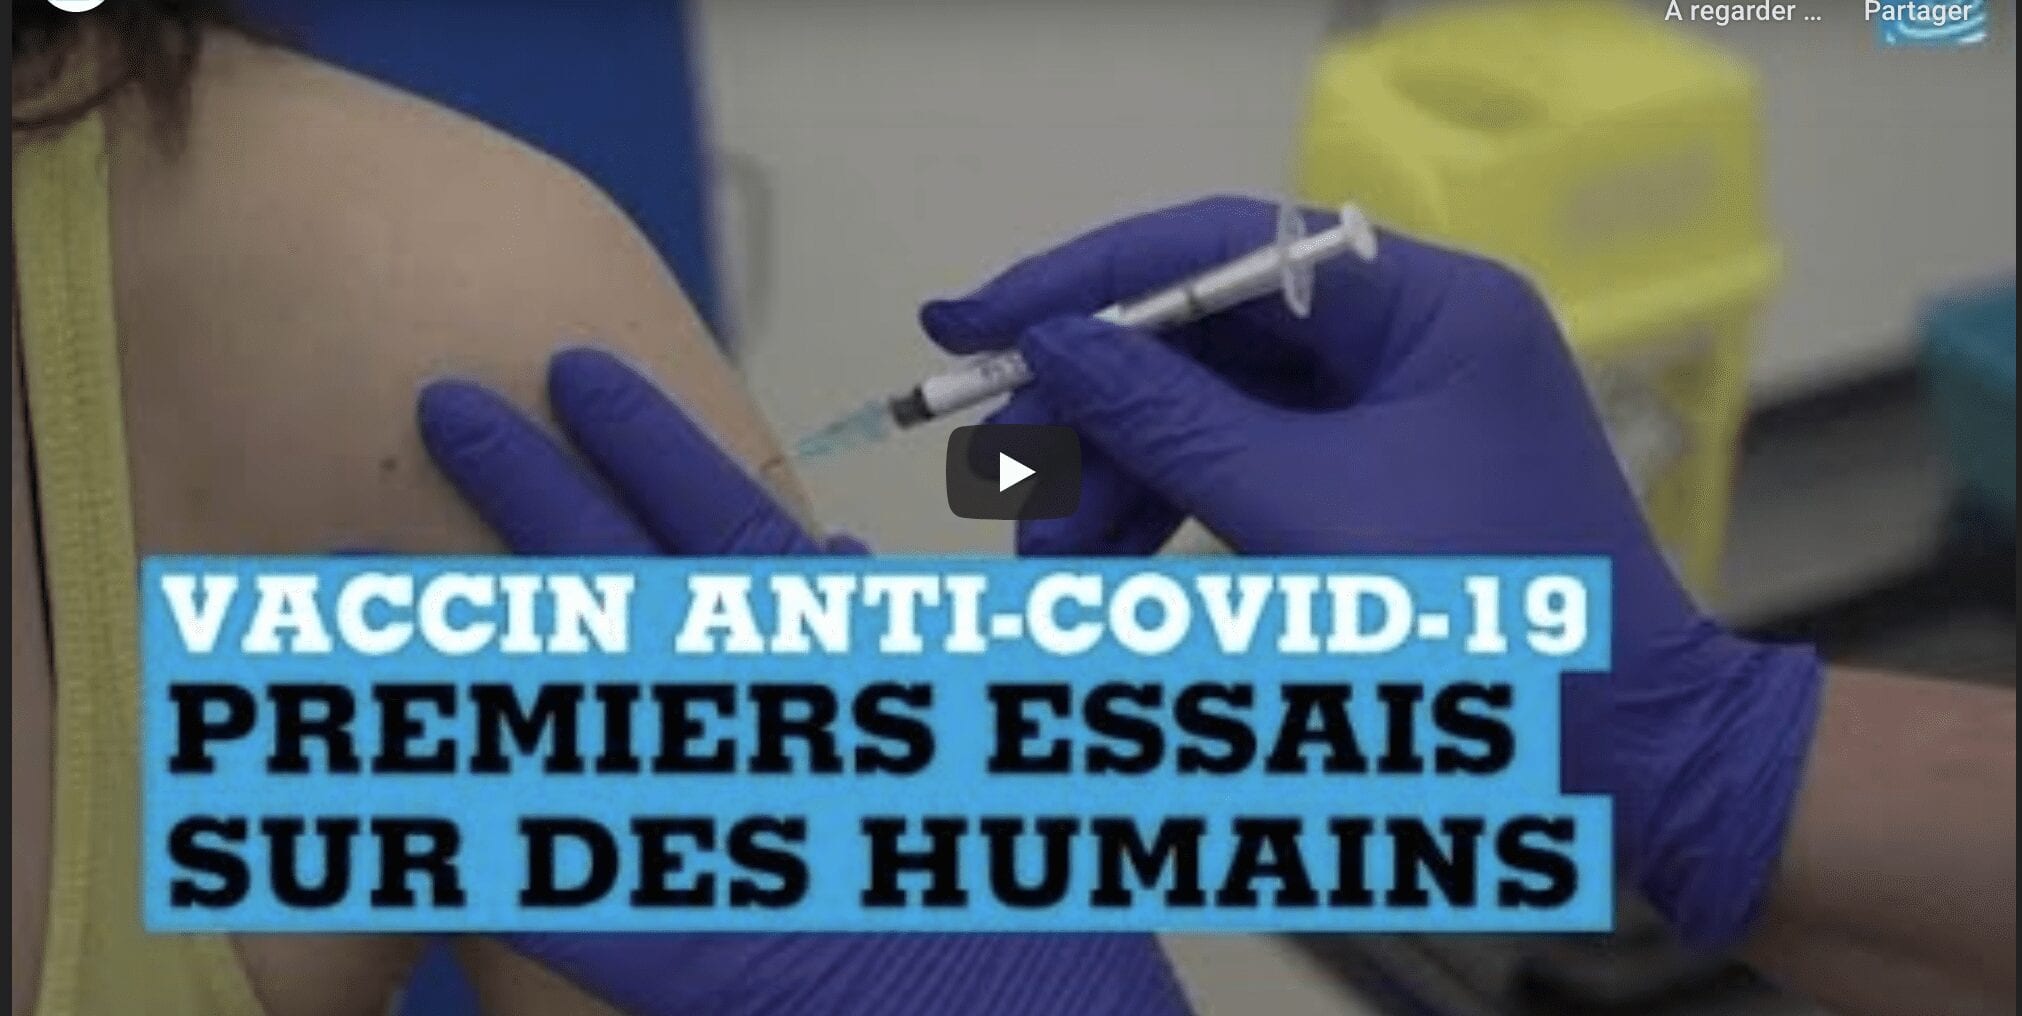 Vaccin anti Covid-19 : Premiers essais sur l’humain au Royaume Uni